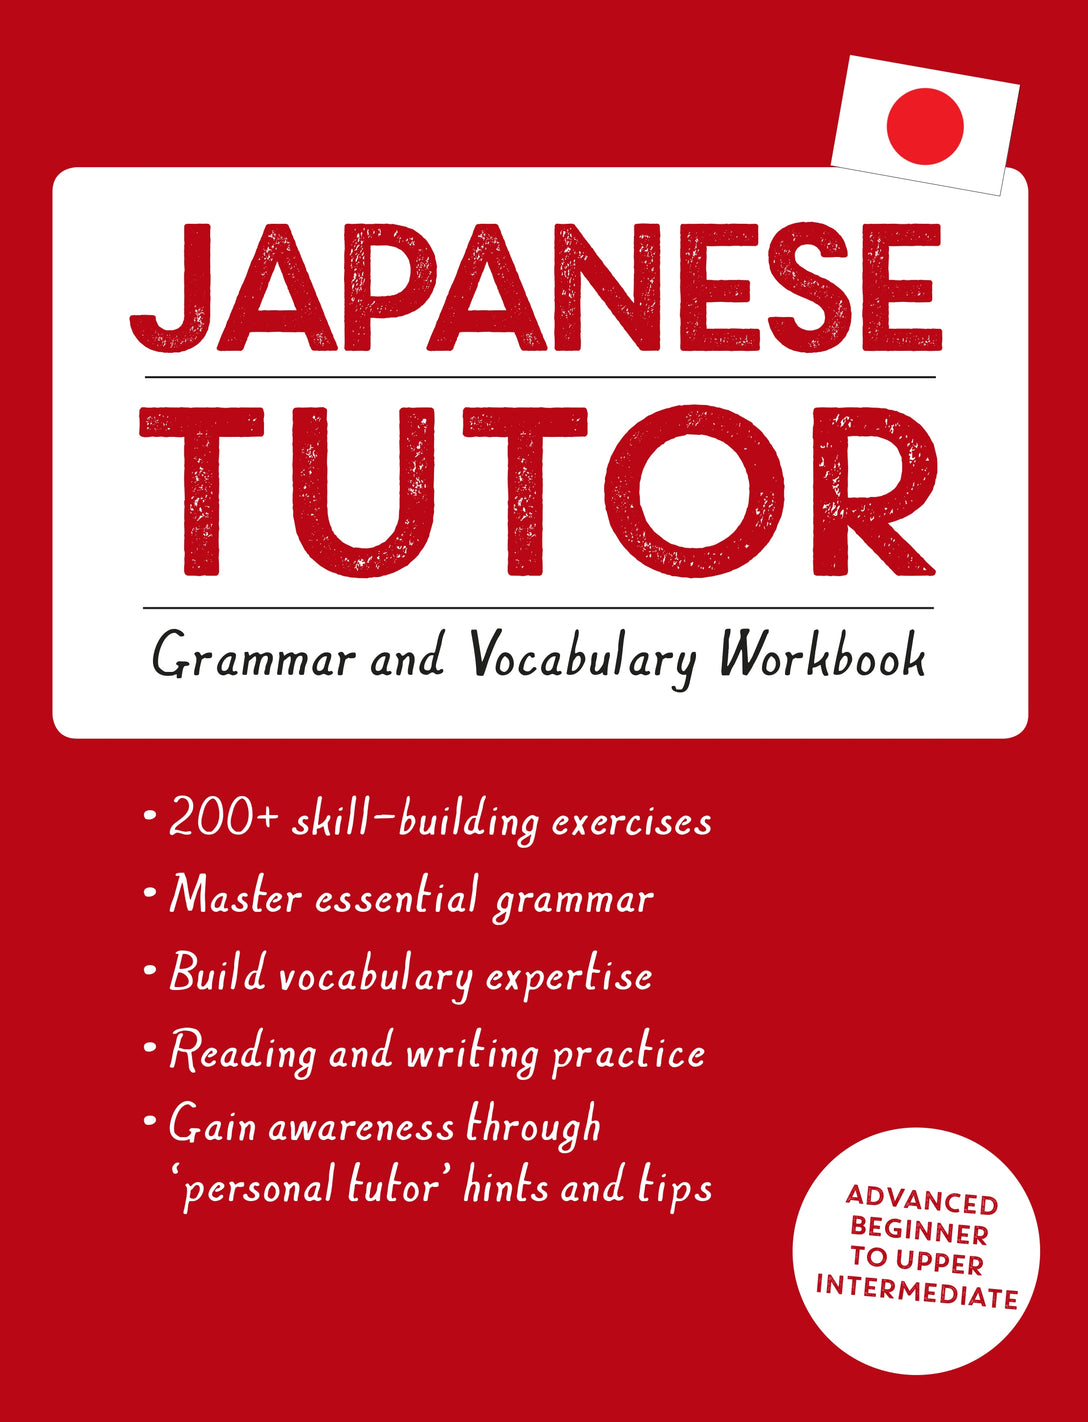 Japanese Tutor: Grammar and Vocabulary Workbook (Learn Japanese with Teach Yourself) by Shin-Ichiro Okajima